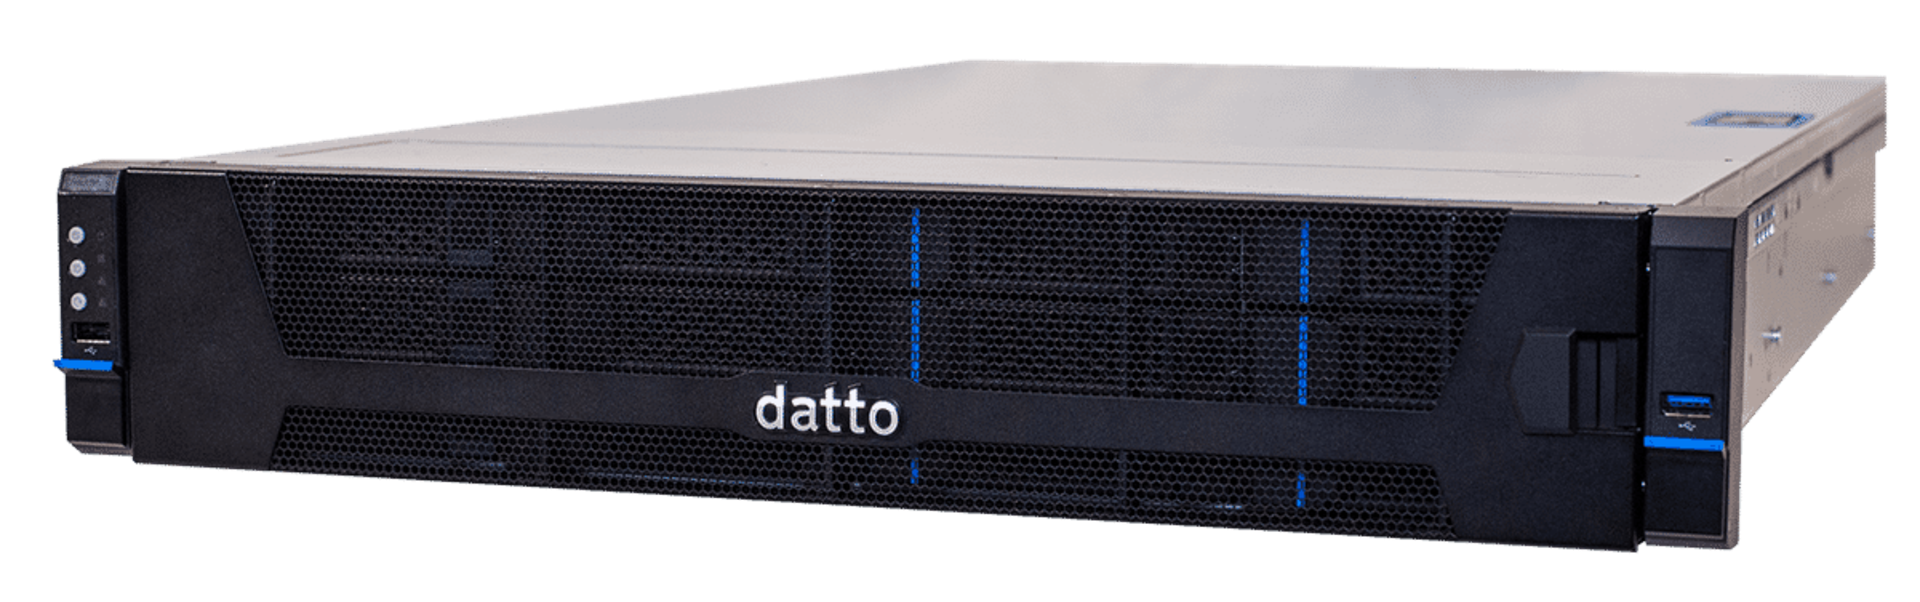 DATTO, S3-P1000, ENTERPRISE BACKUP SYSTEM